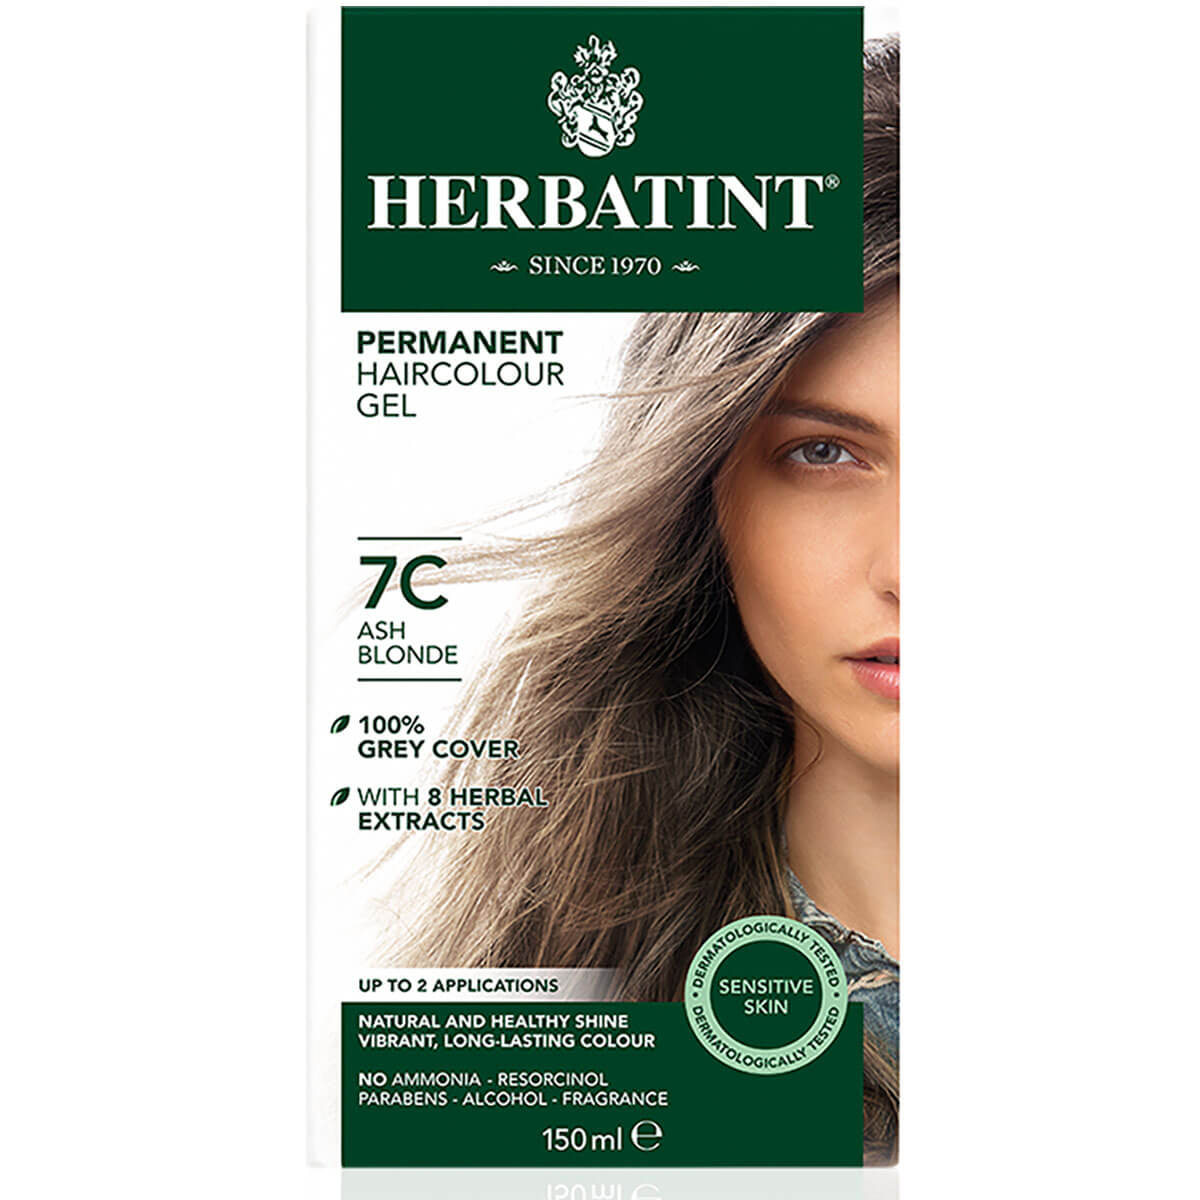 Blonde, Ash (7C) - Herbatint Permanent Hair Colour Gel